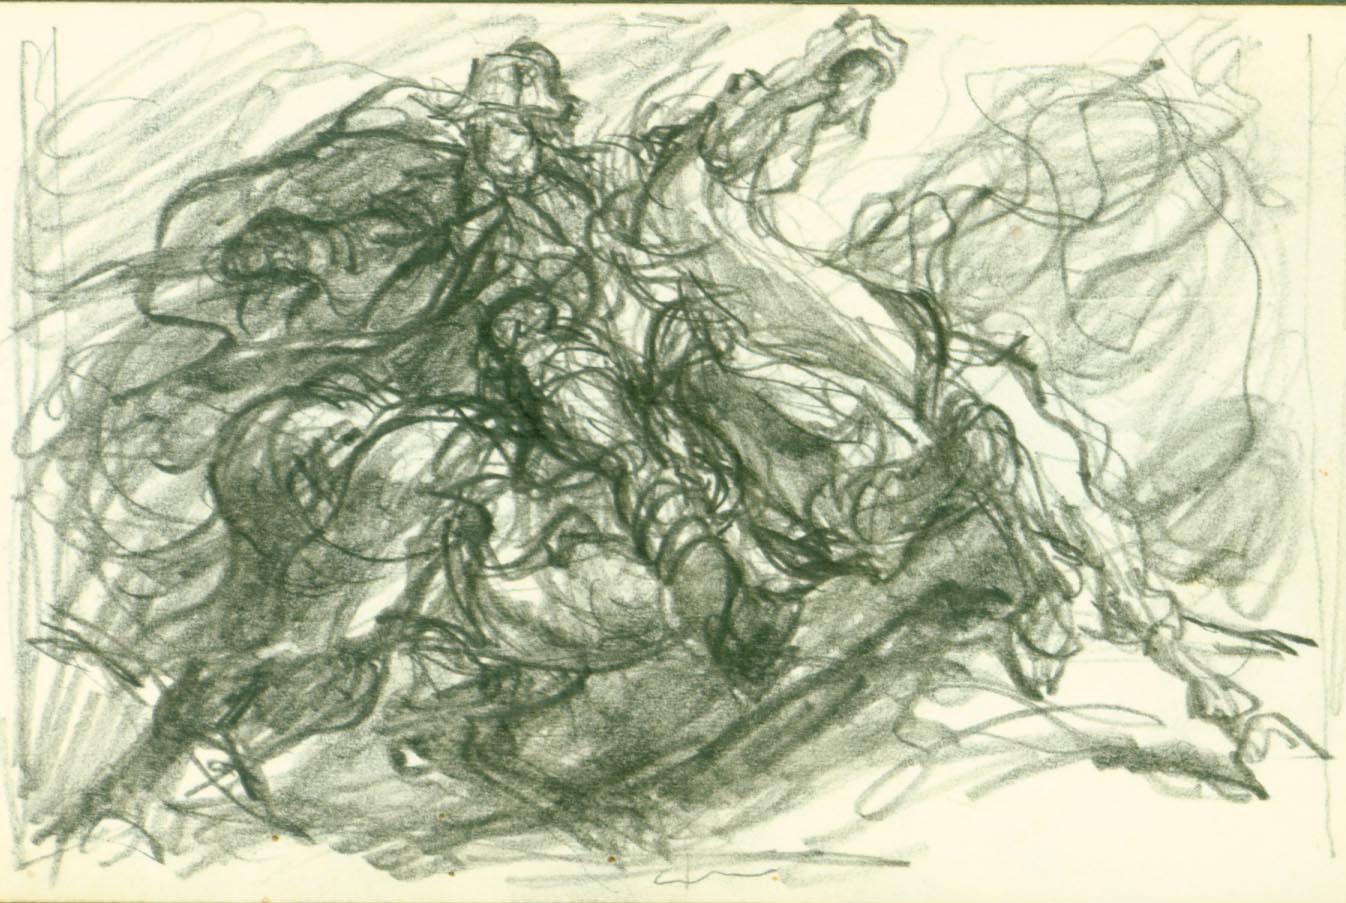 Sketch on Index Card of Napoleon on Horseback